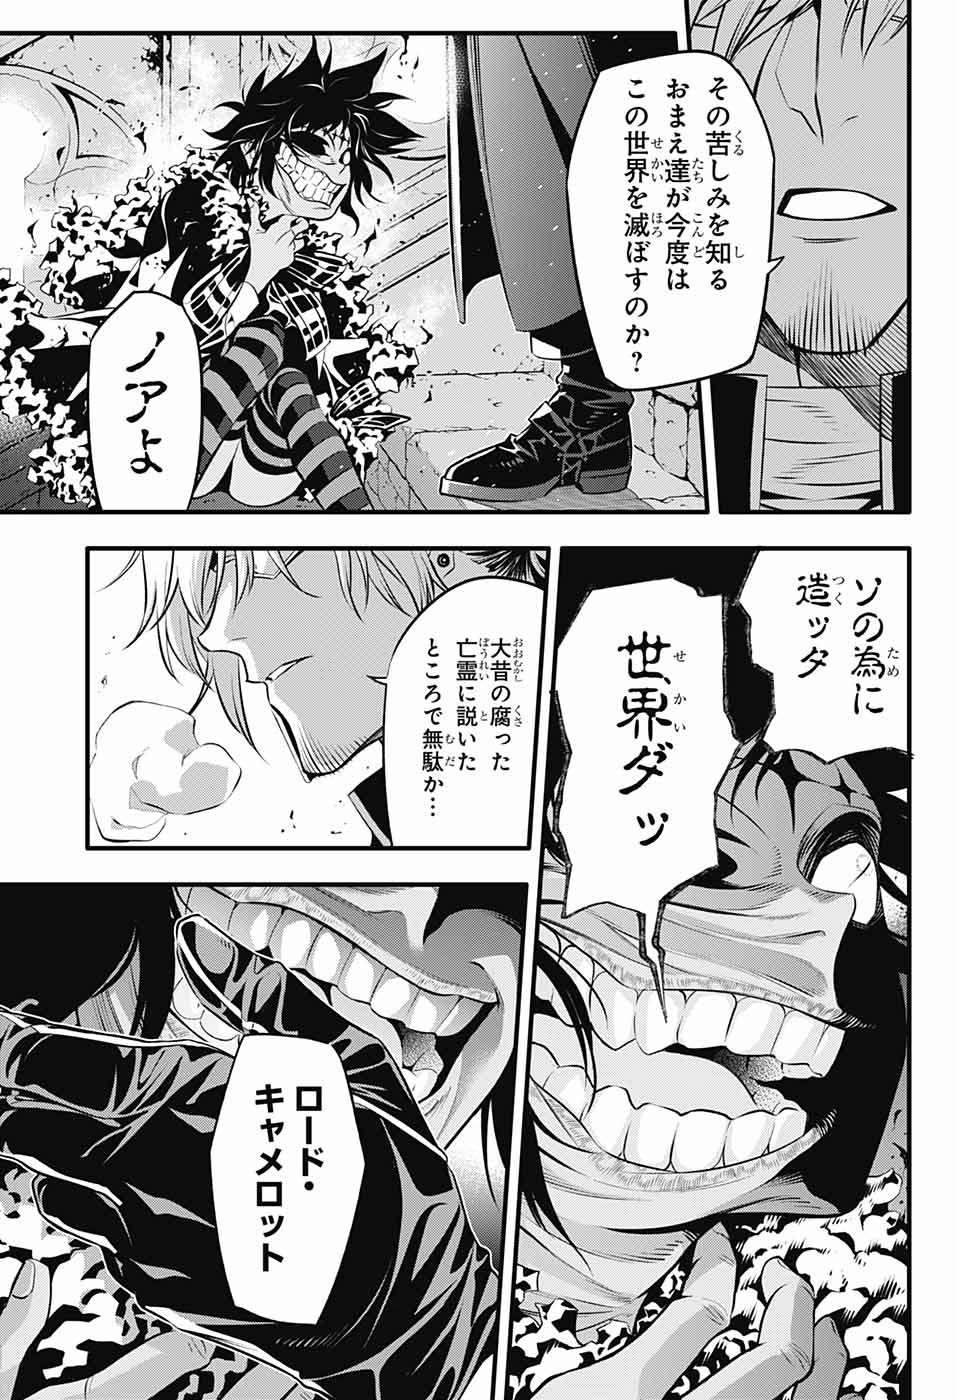 D Gray Man Chapter 235 Page 5 Raw Sen Manga